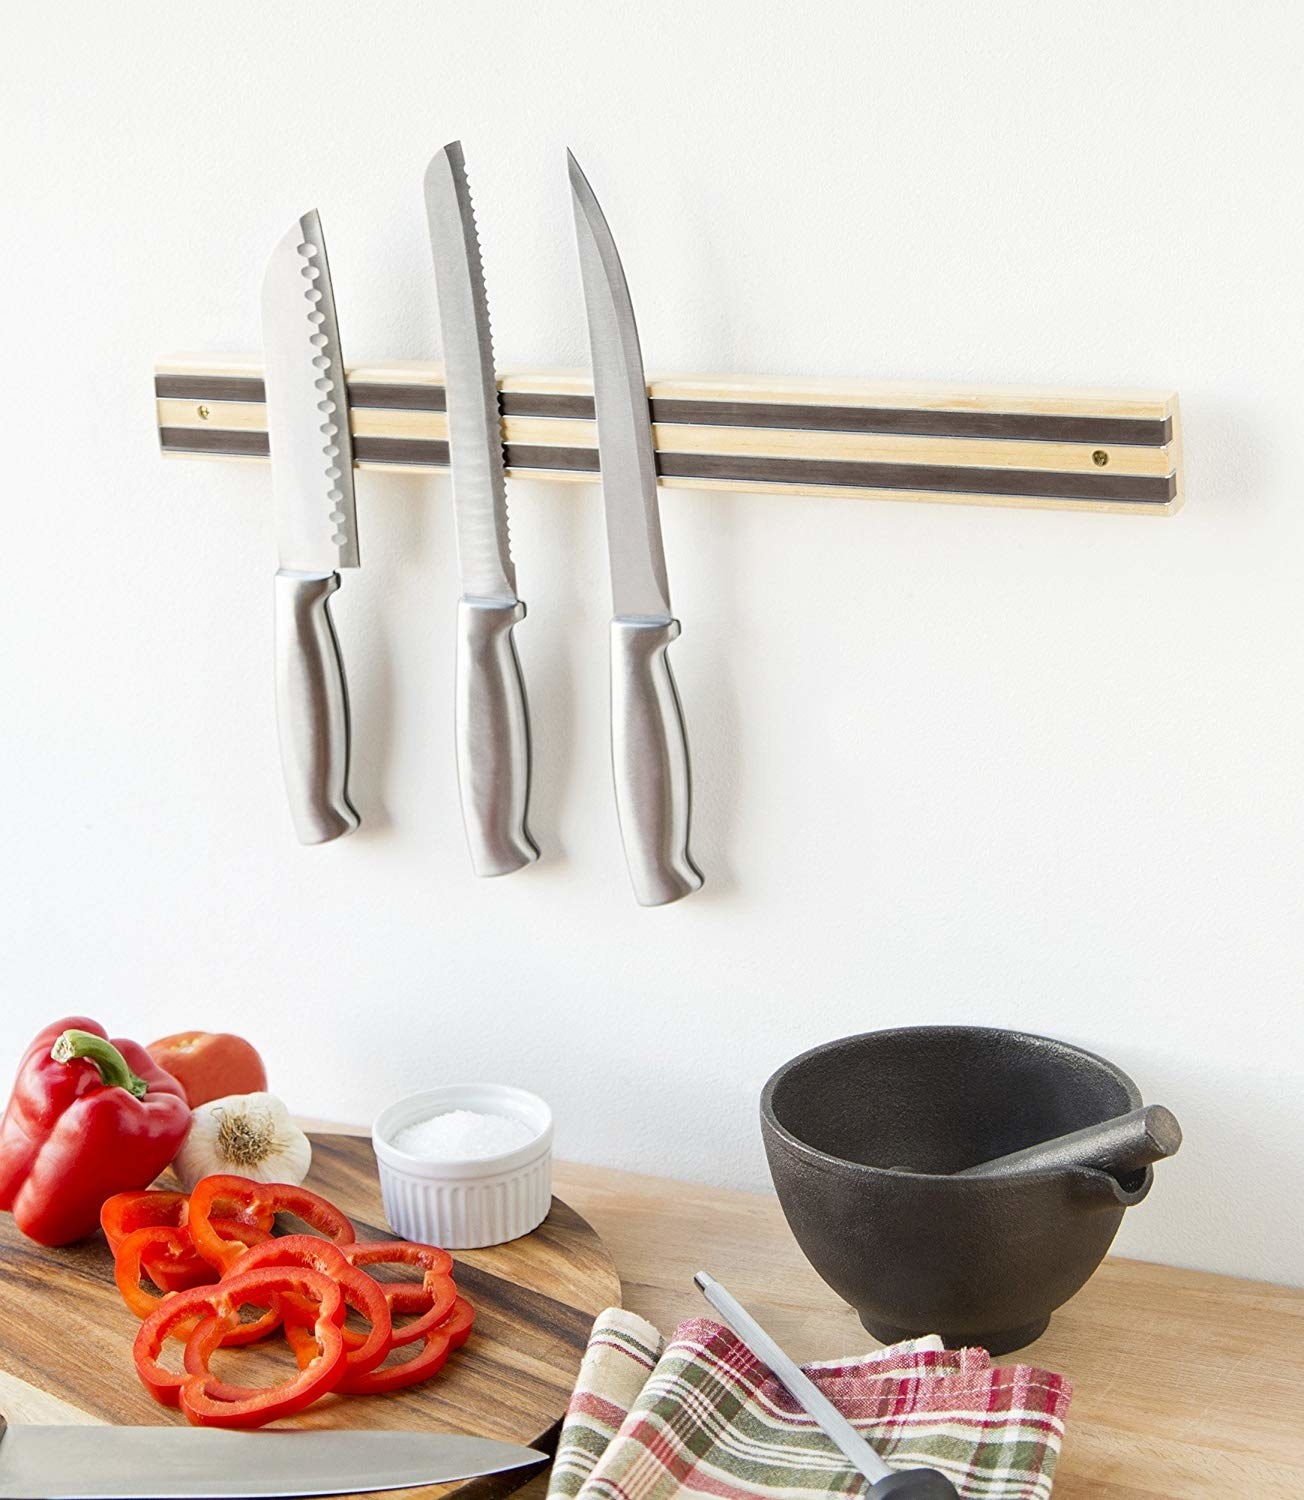 A knife wall strip holding three sharp kitchen knives